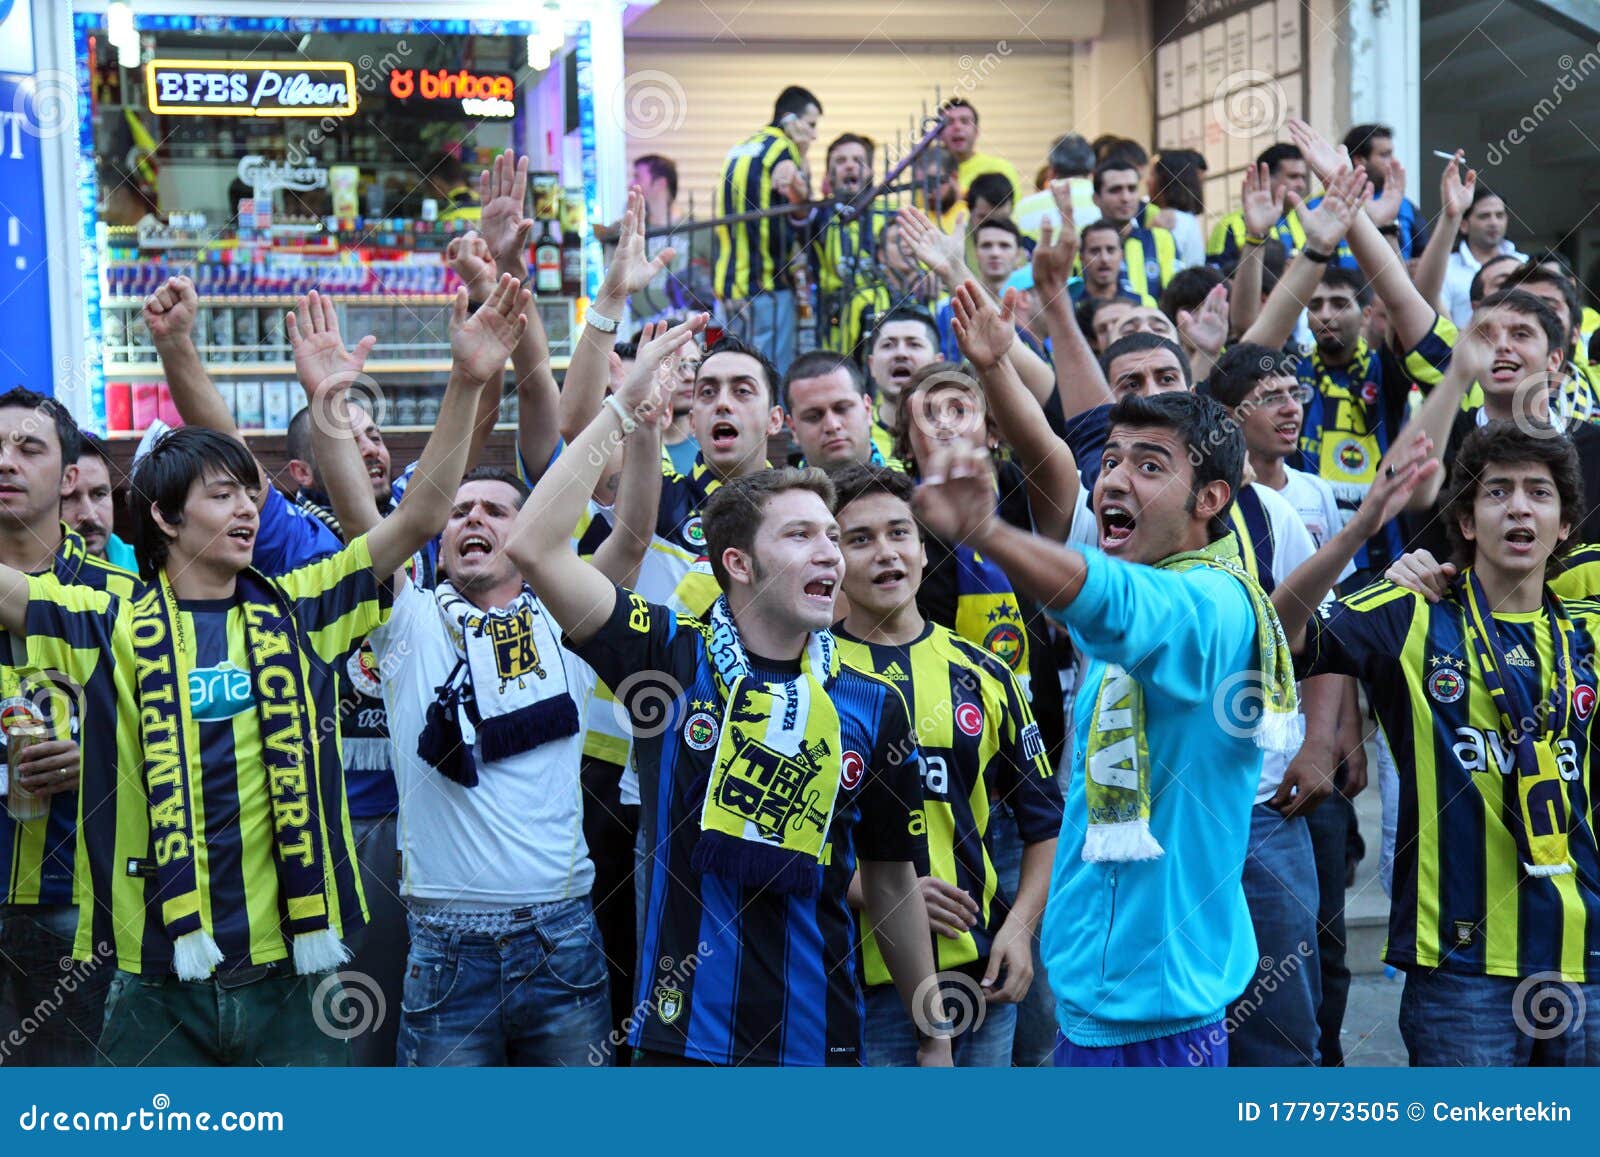 Adana Demirspor vs Fenerbahçe: A Clash of Rivalry and History